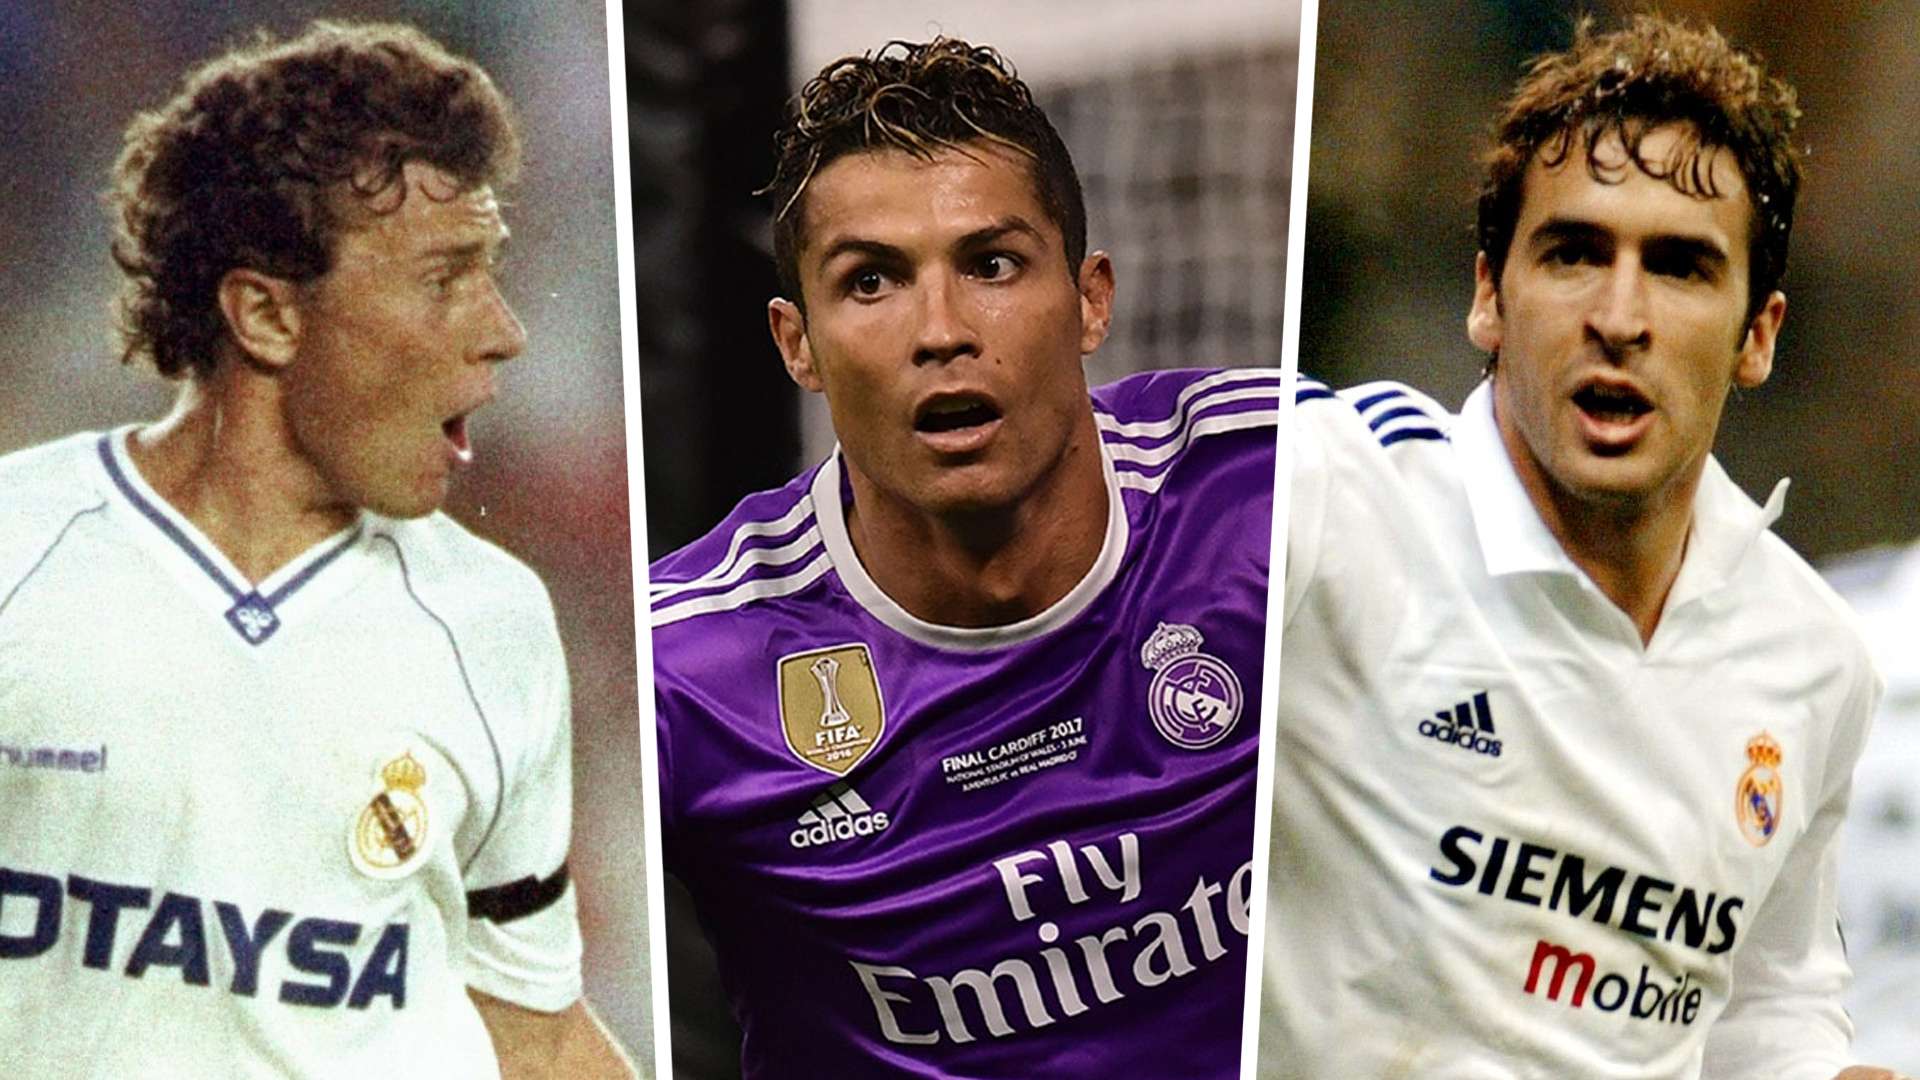 Real Madrid No.7s - Emilio Butragueno, Cristiano Ronaldo, Raul Gonzales